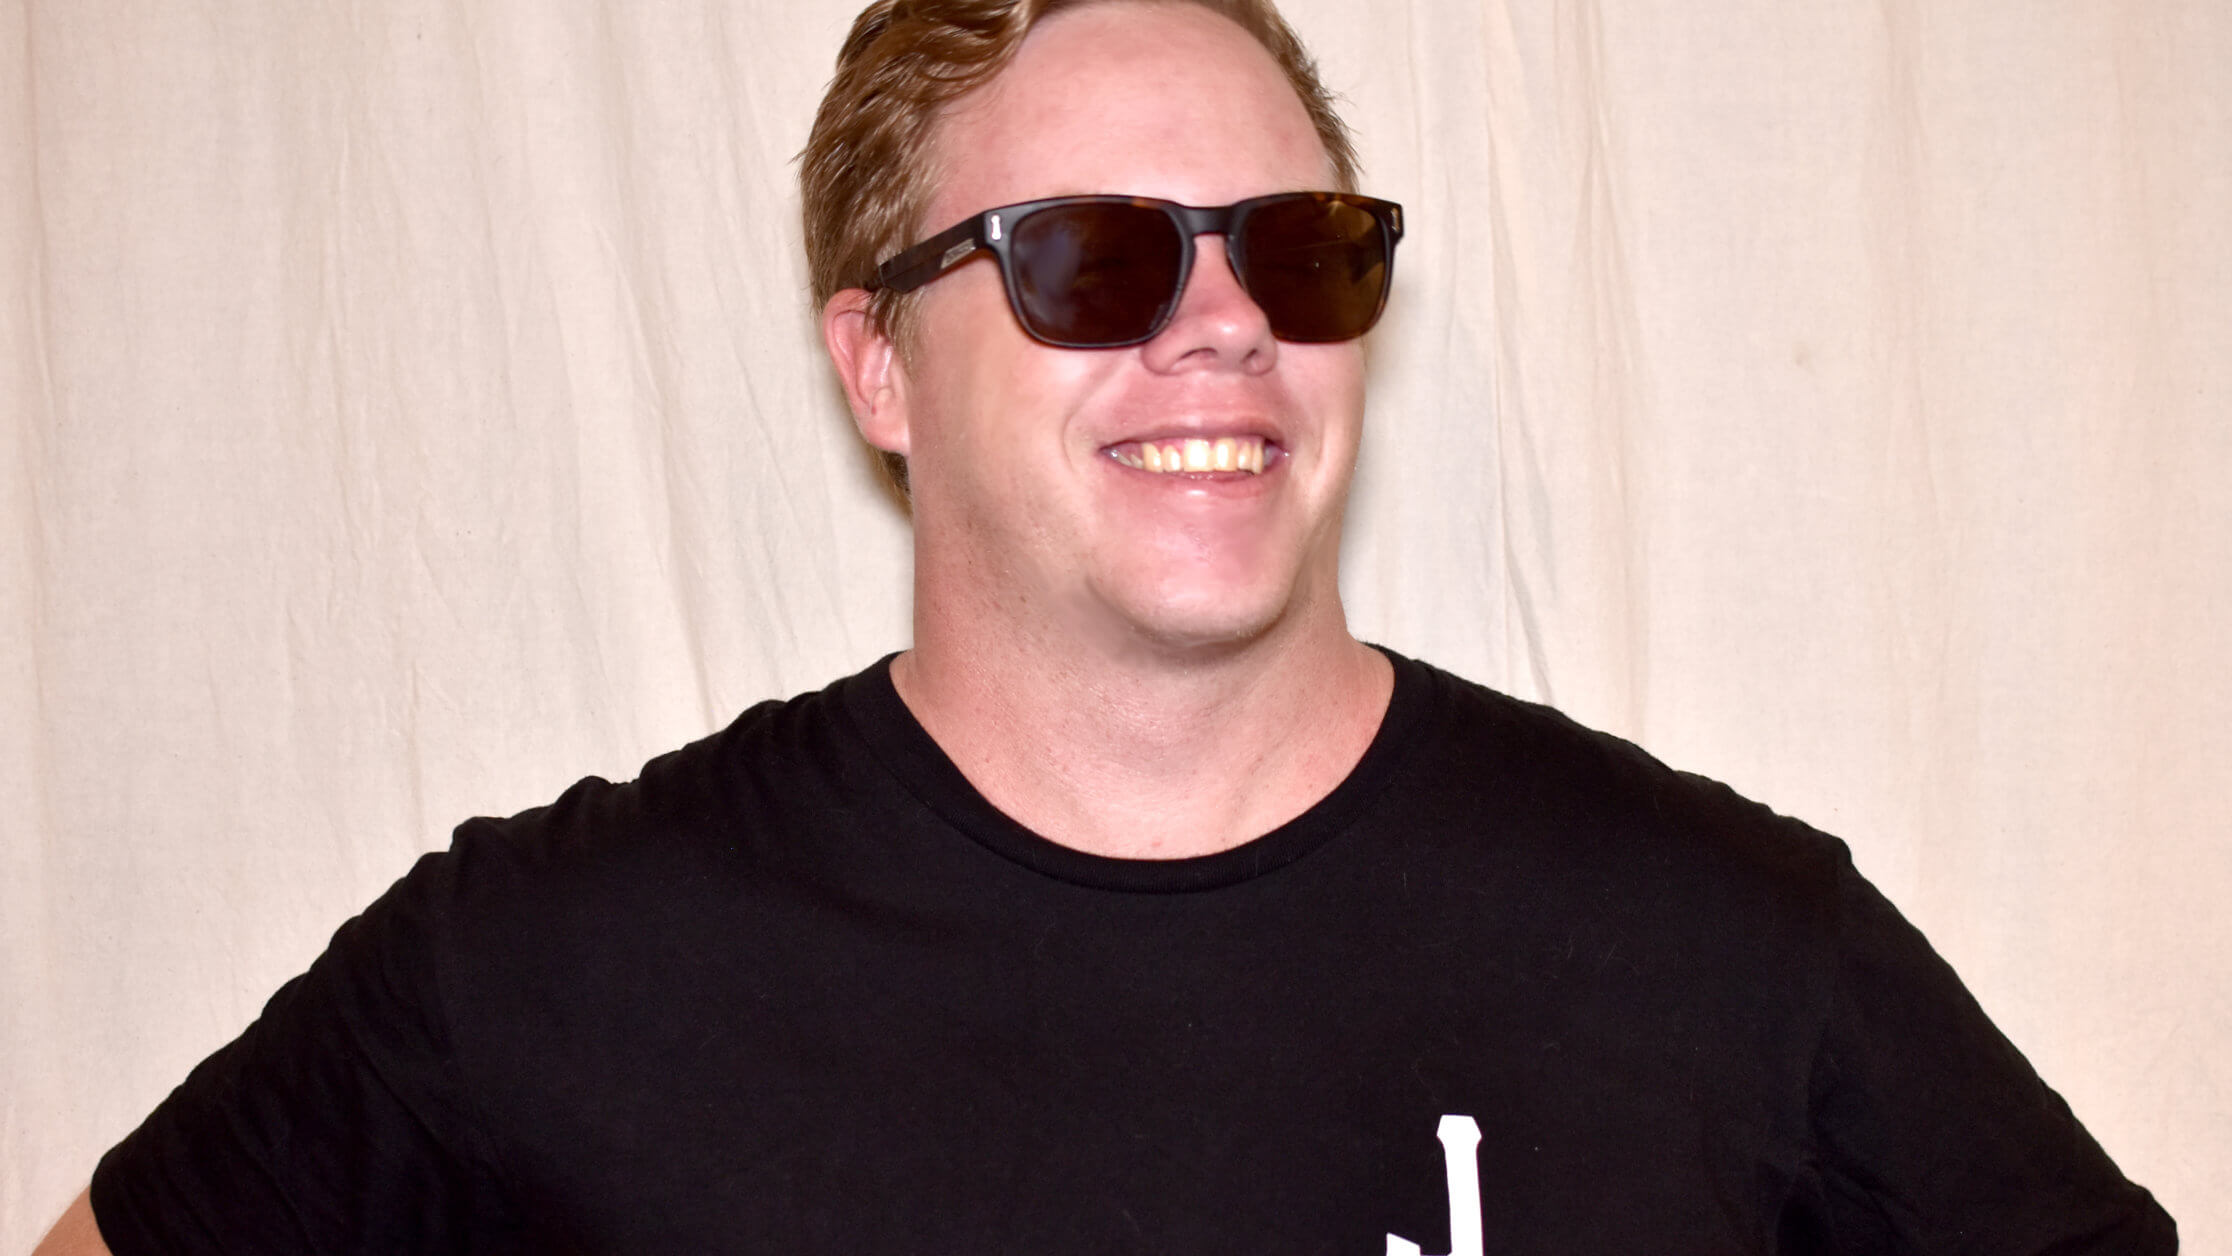 Man smiling, wearing black tshirt with white J on it.